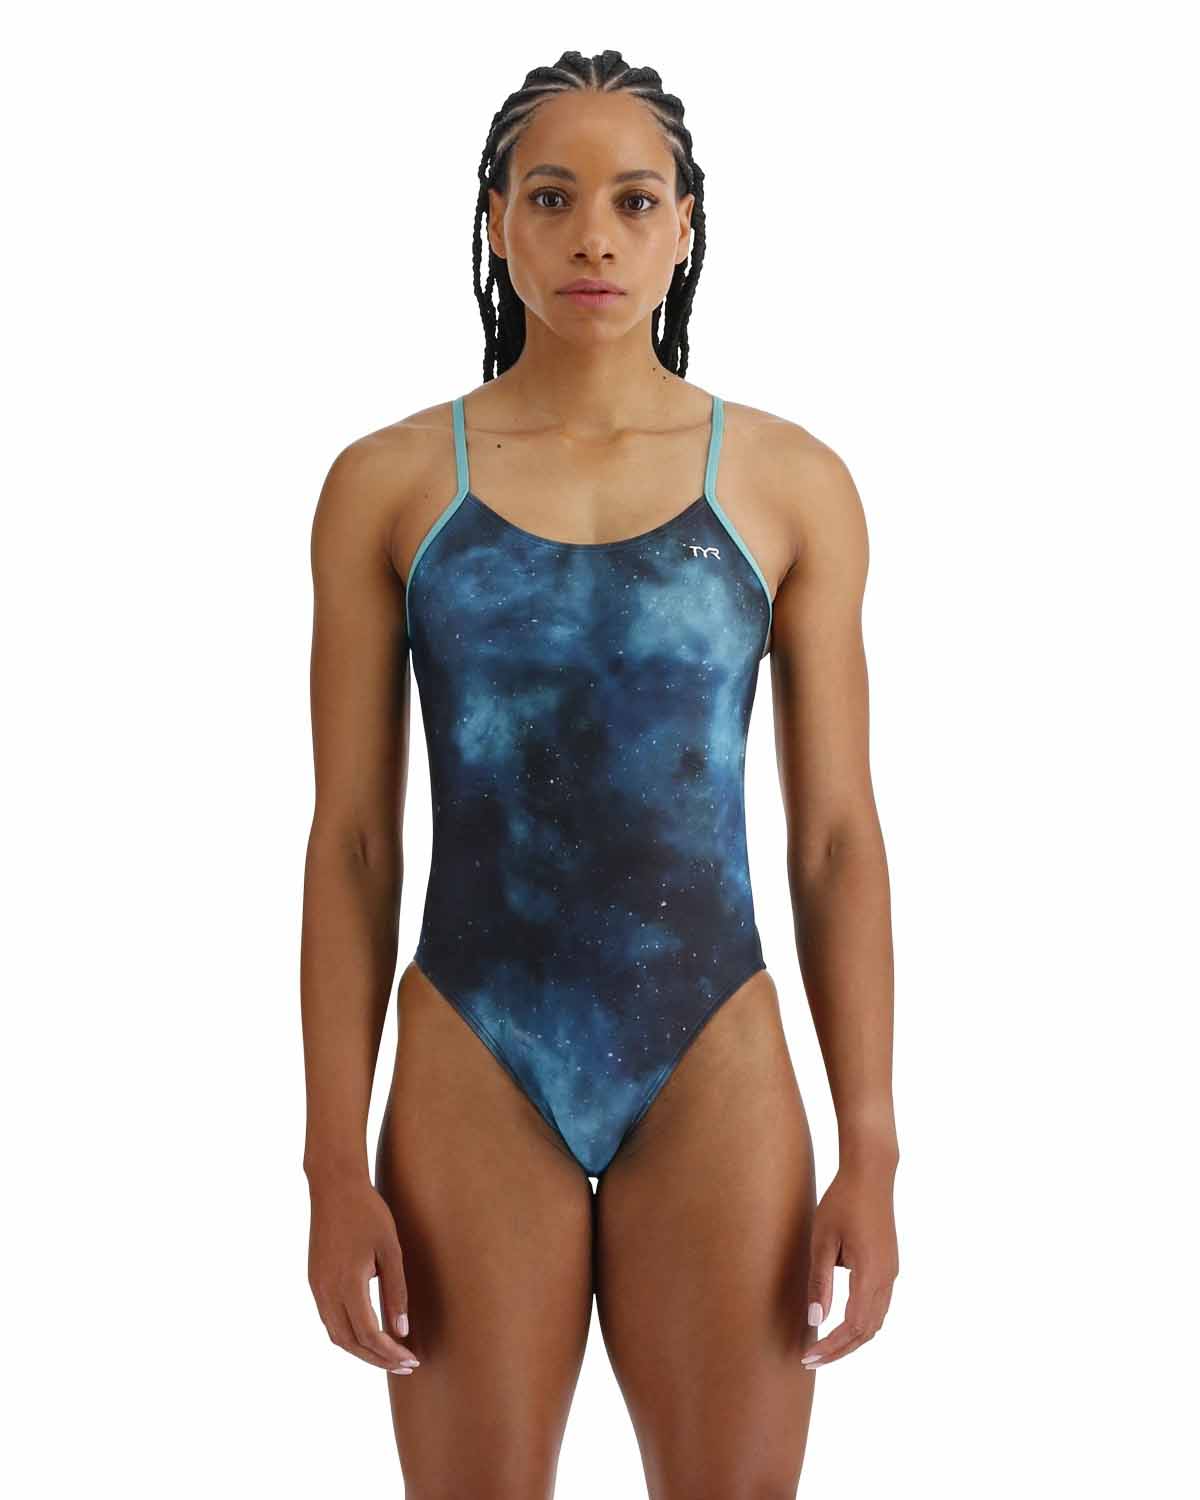 Durafast Elite Cutoutfit Swimsuit - Cosmic Night